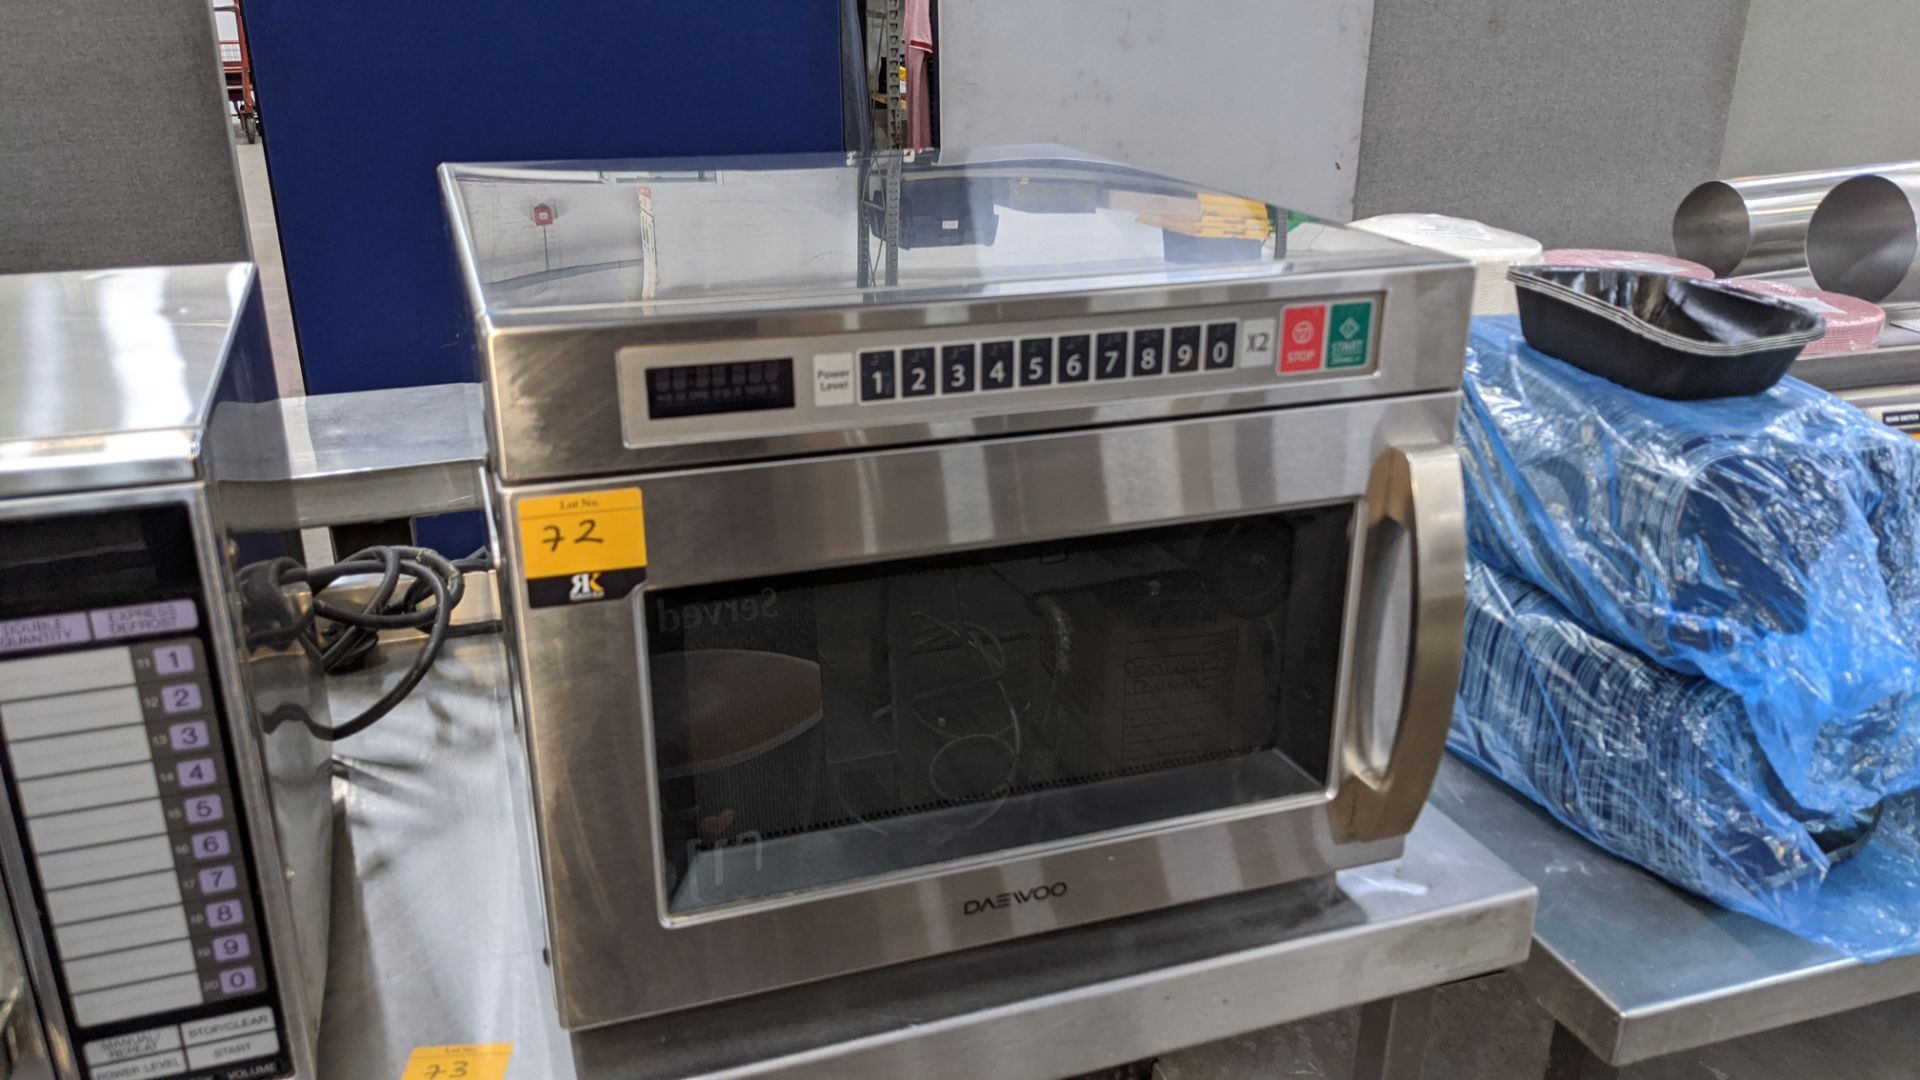 Daewoo commercial microwave model KOM-9F85